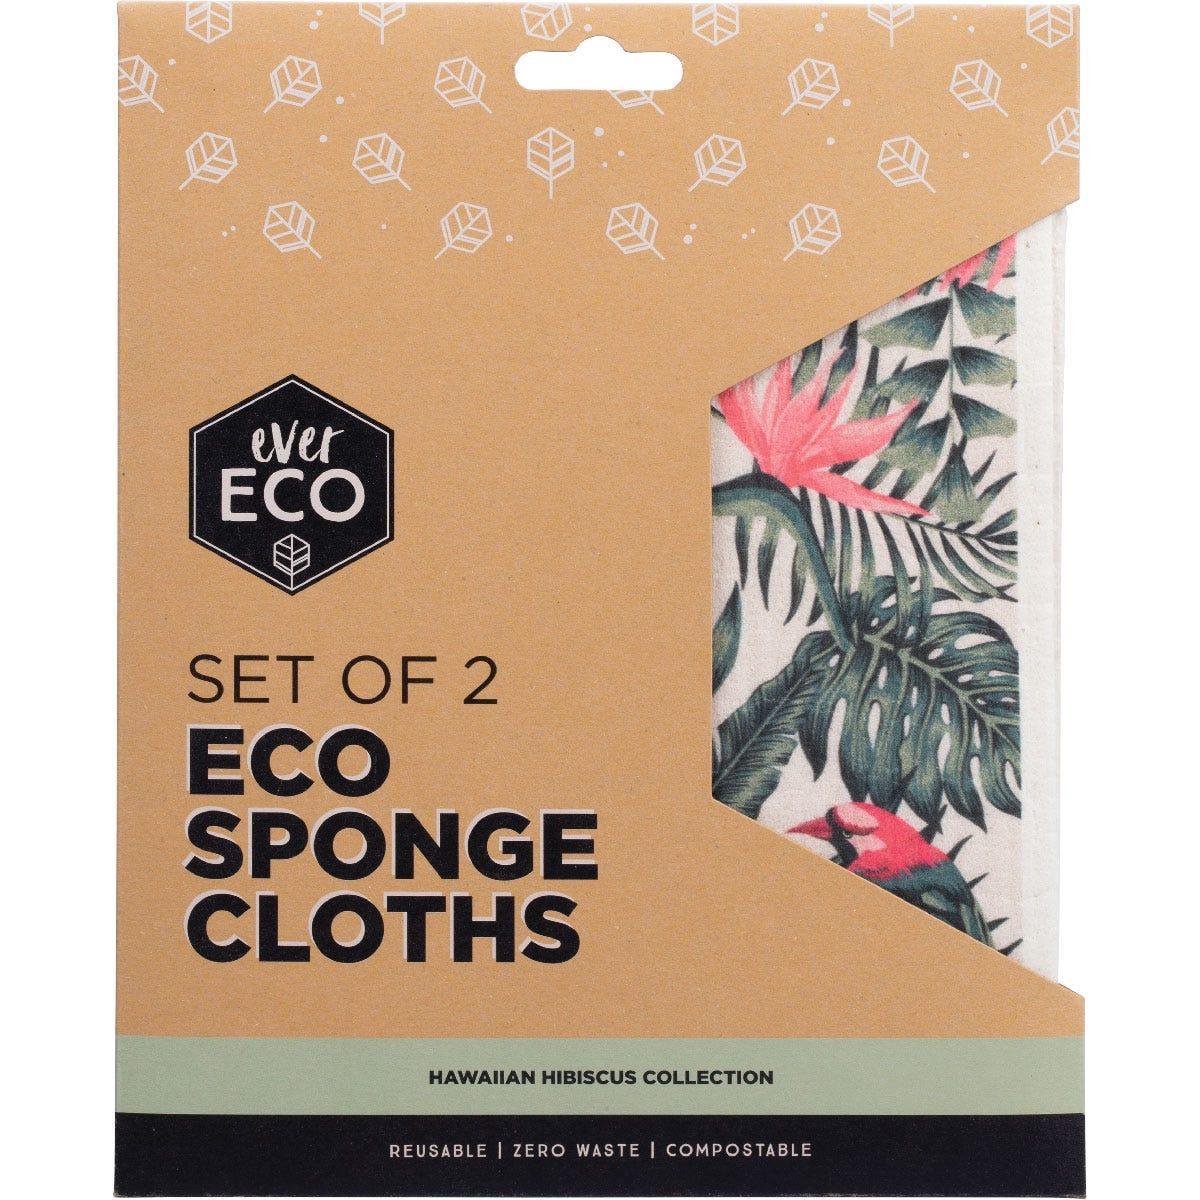 EVER ECO Eco Sponge Cloths Hawaiian Hibiscus Collection 2pk